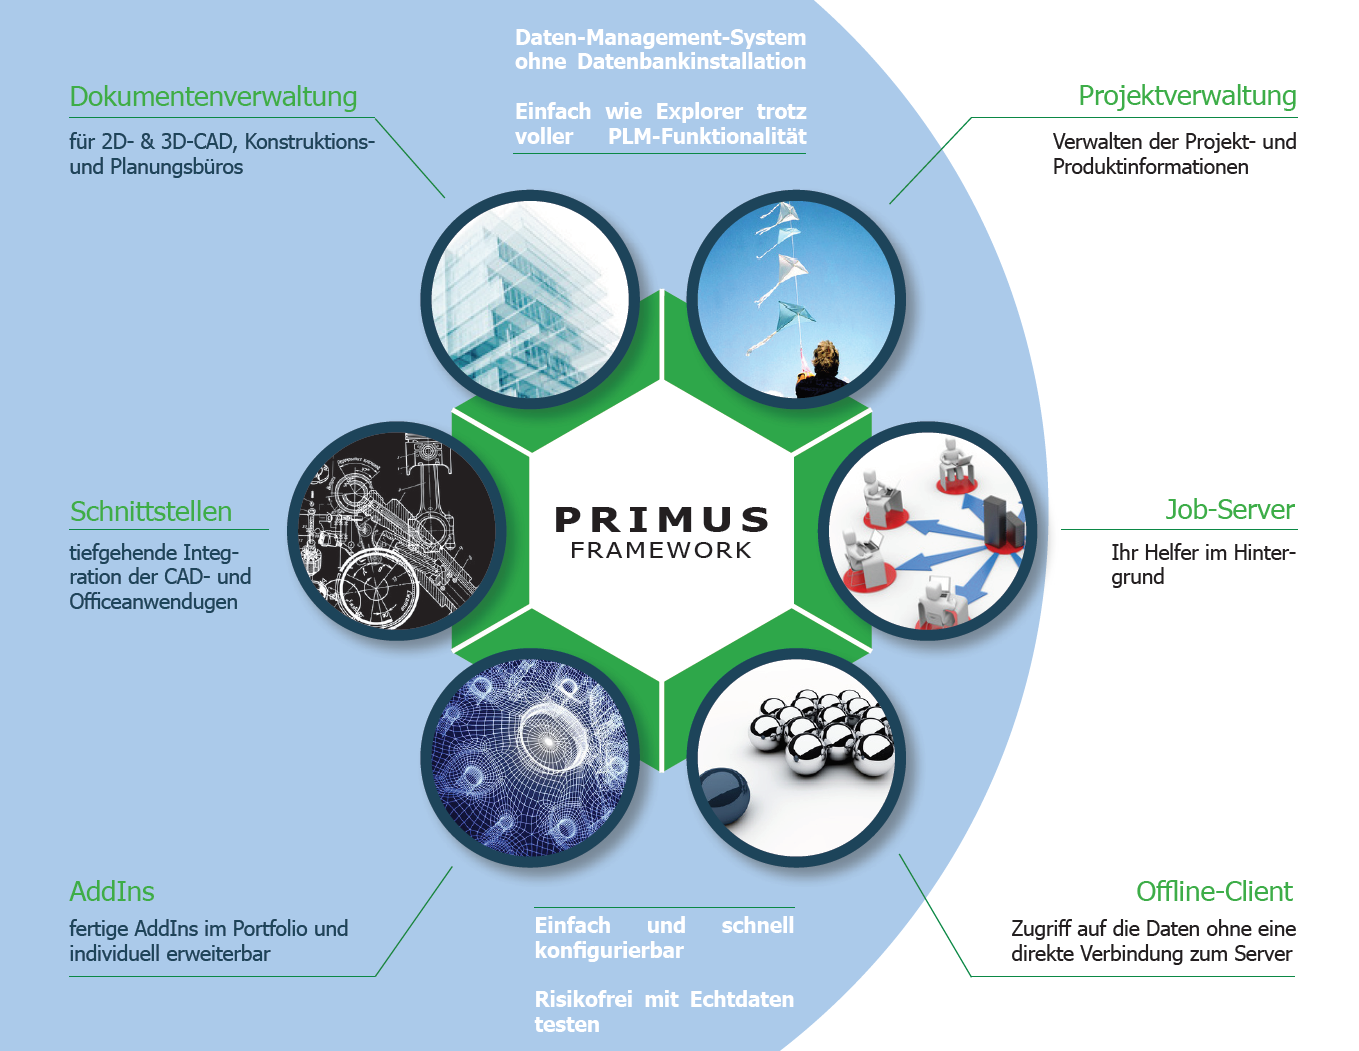 Primus Framework